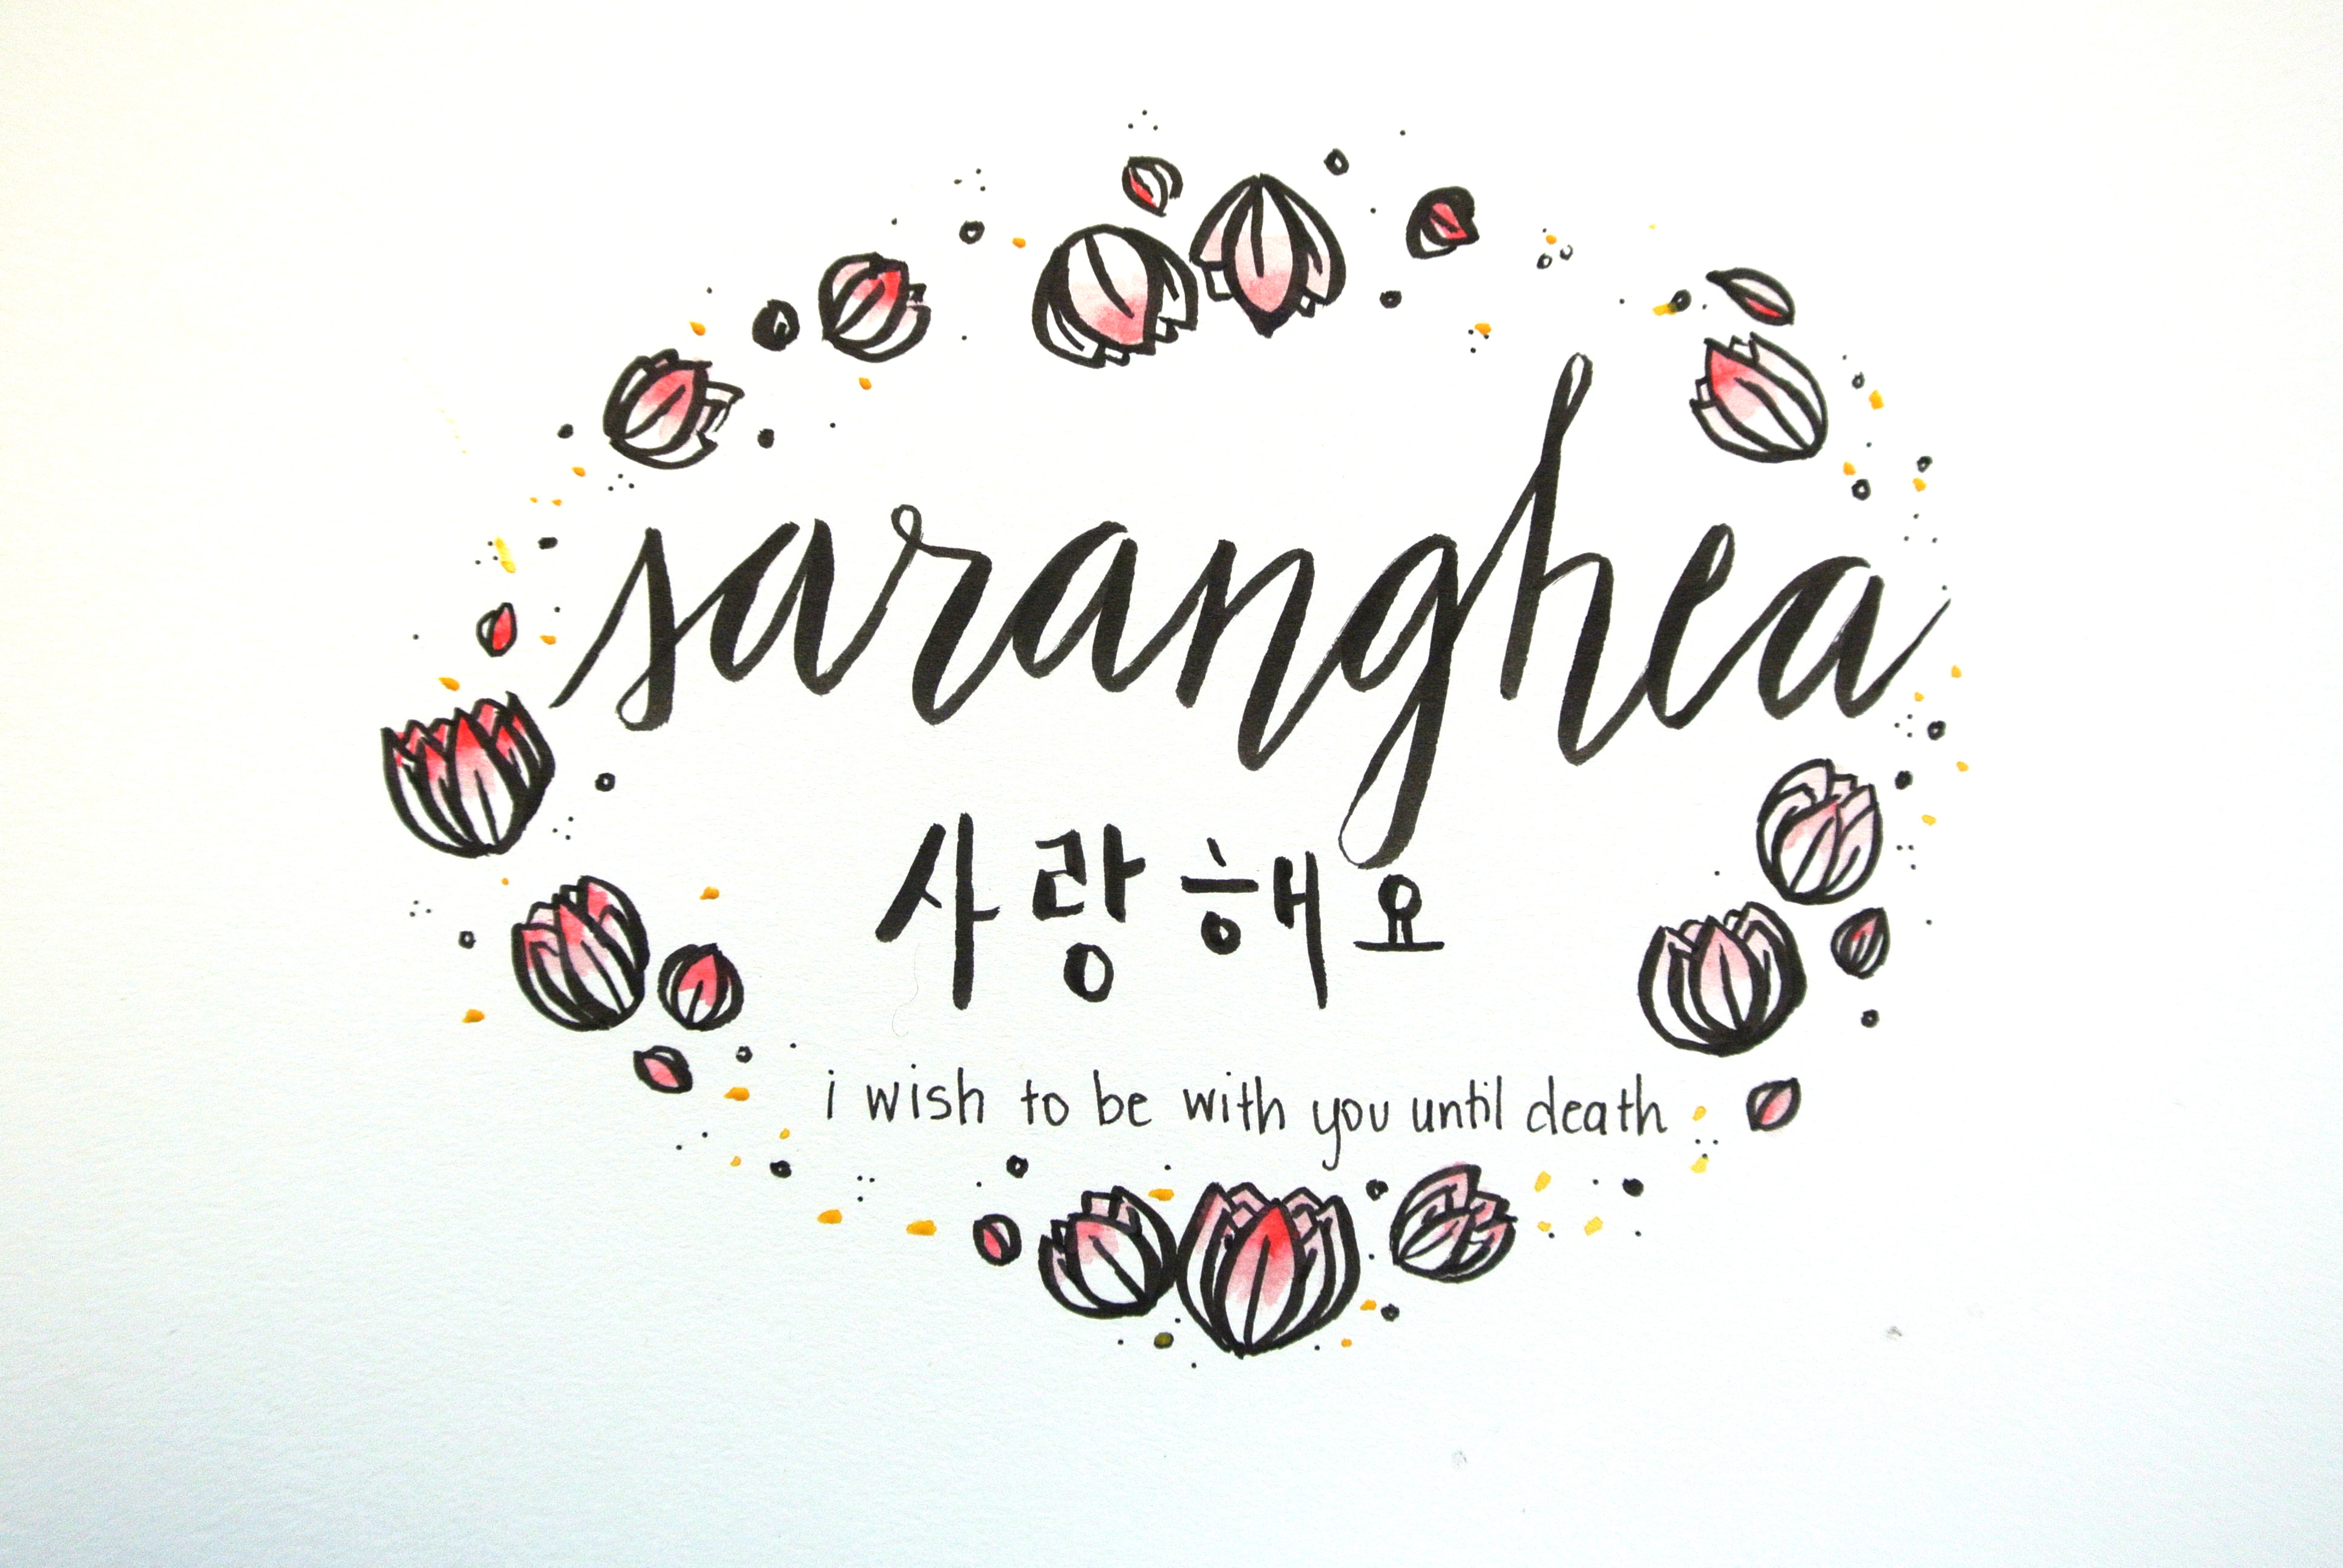 Hand-Written : Saranghae  Welcome.